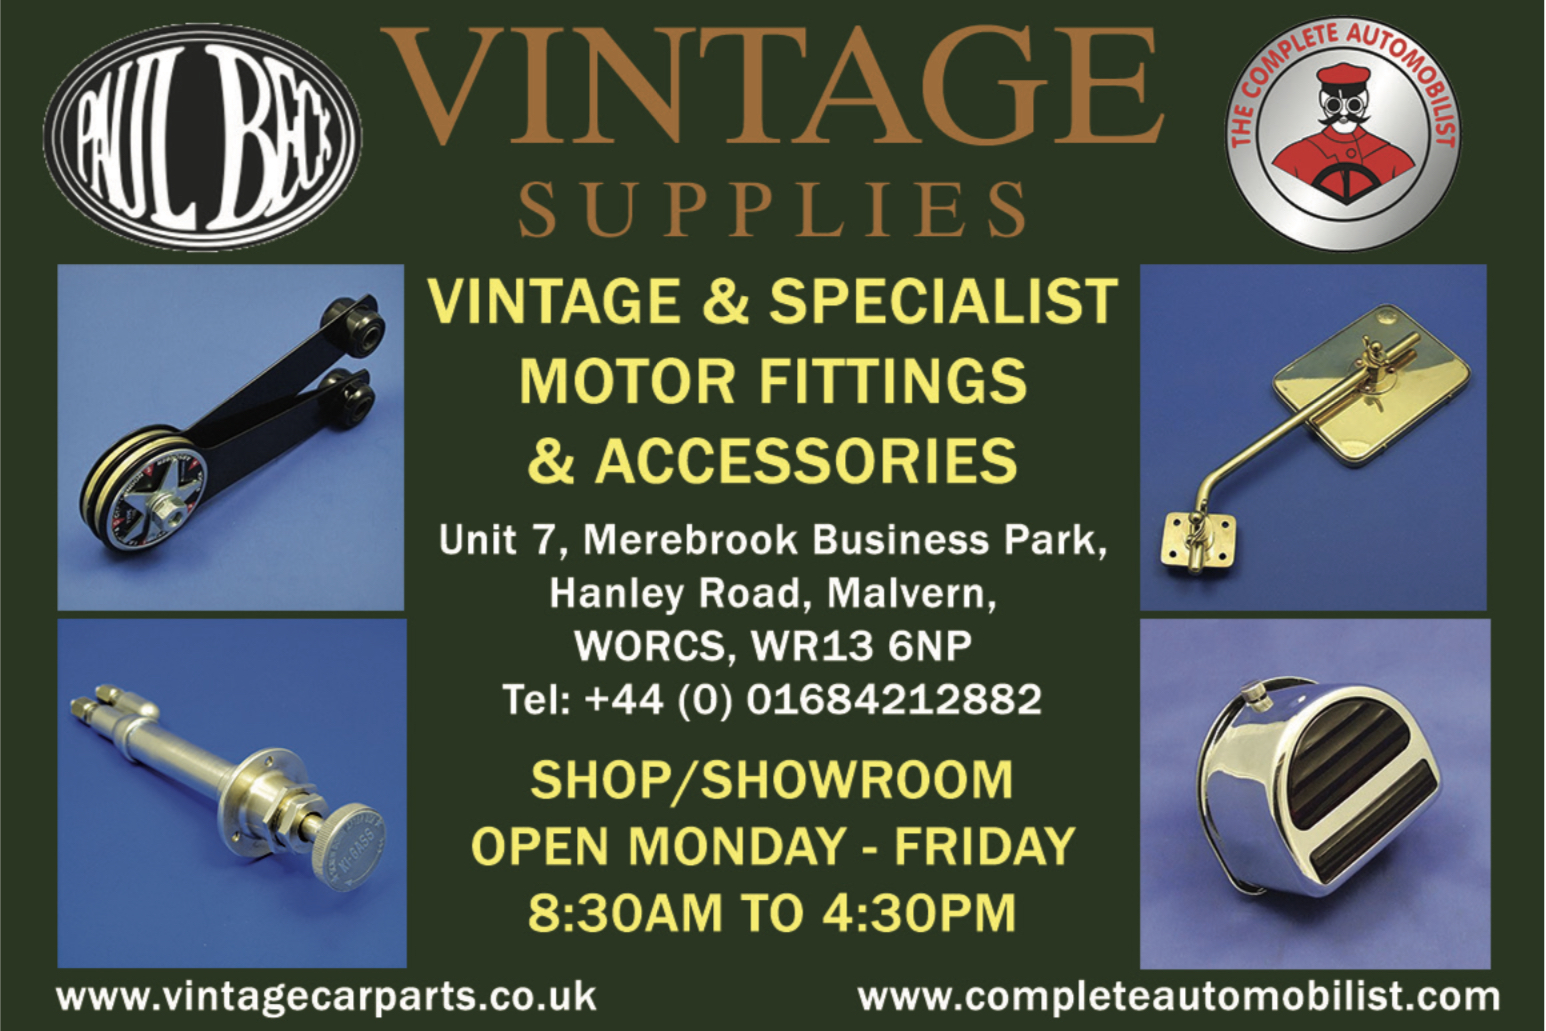 Paul Beck Vintage Supplies - Car accessories & parts for vintage & veteran classic cars